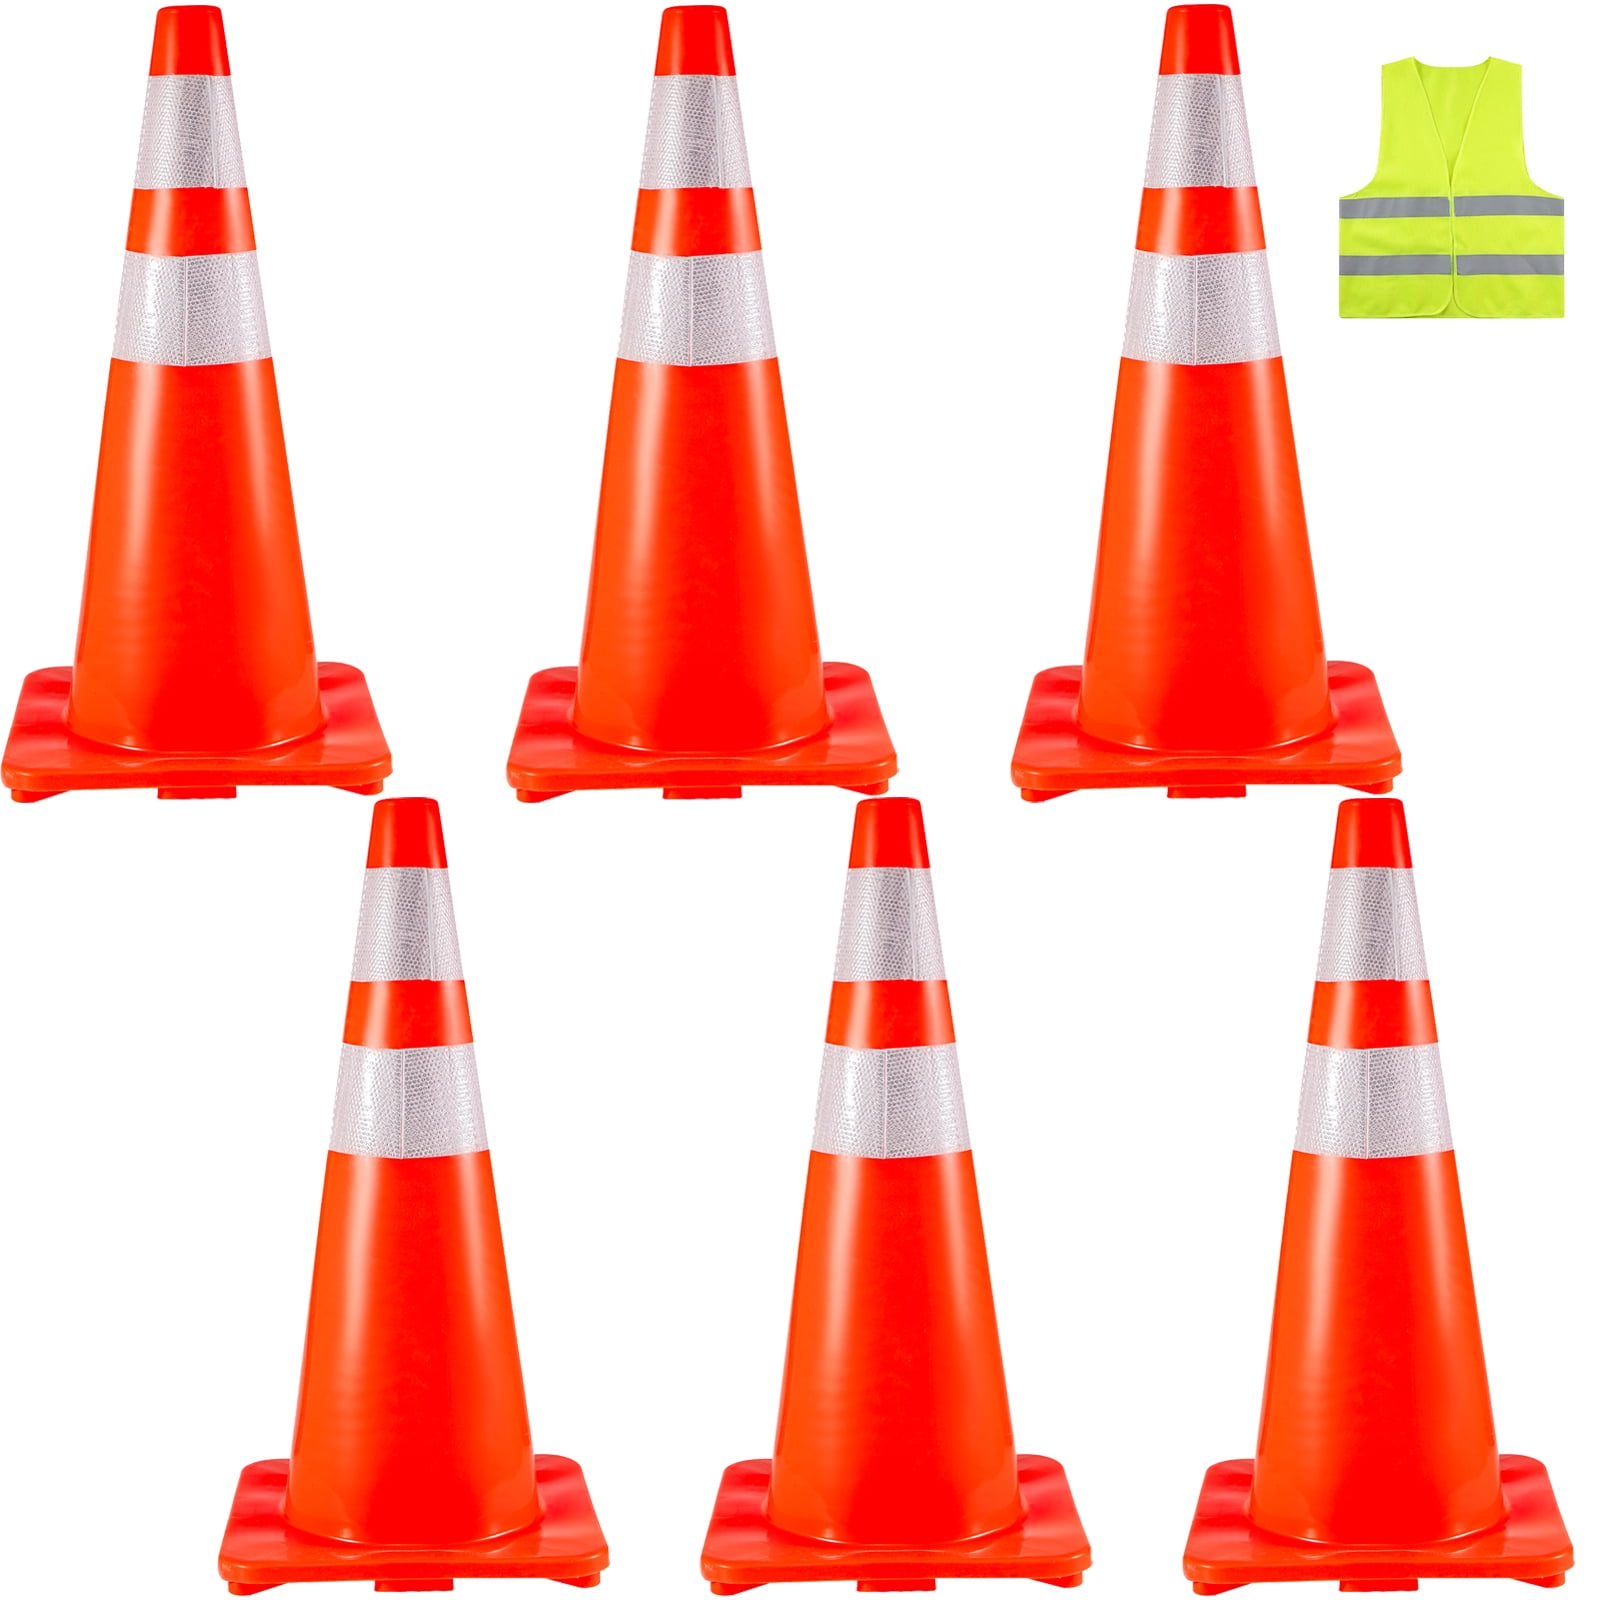 28" Traffic Cone Reflective Orange Safety Highway Parking Warning Cones 8 pcs 